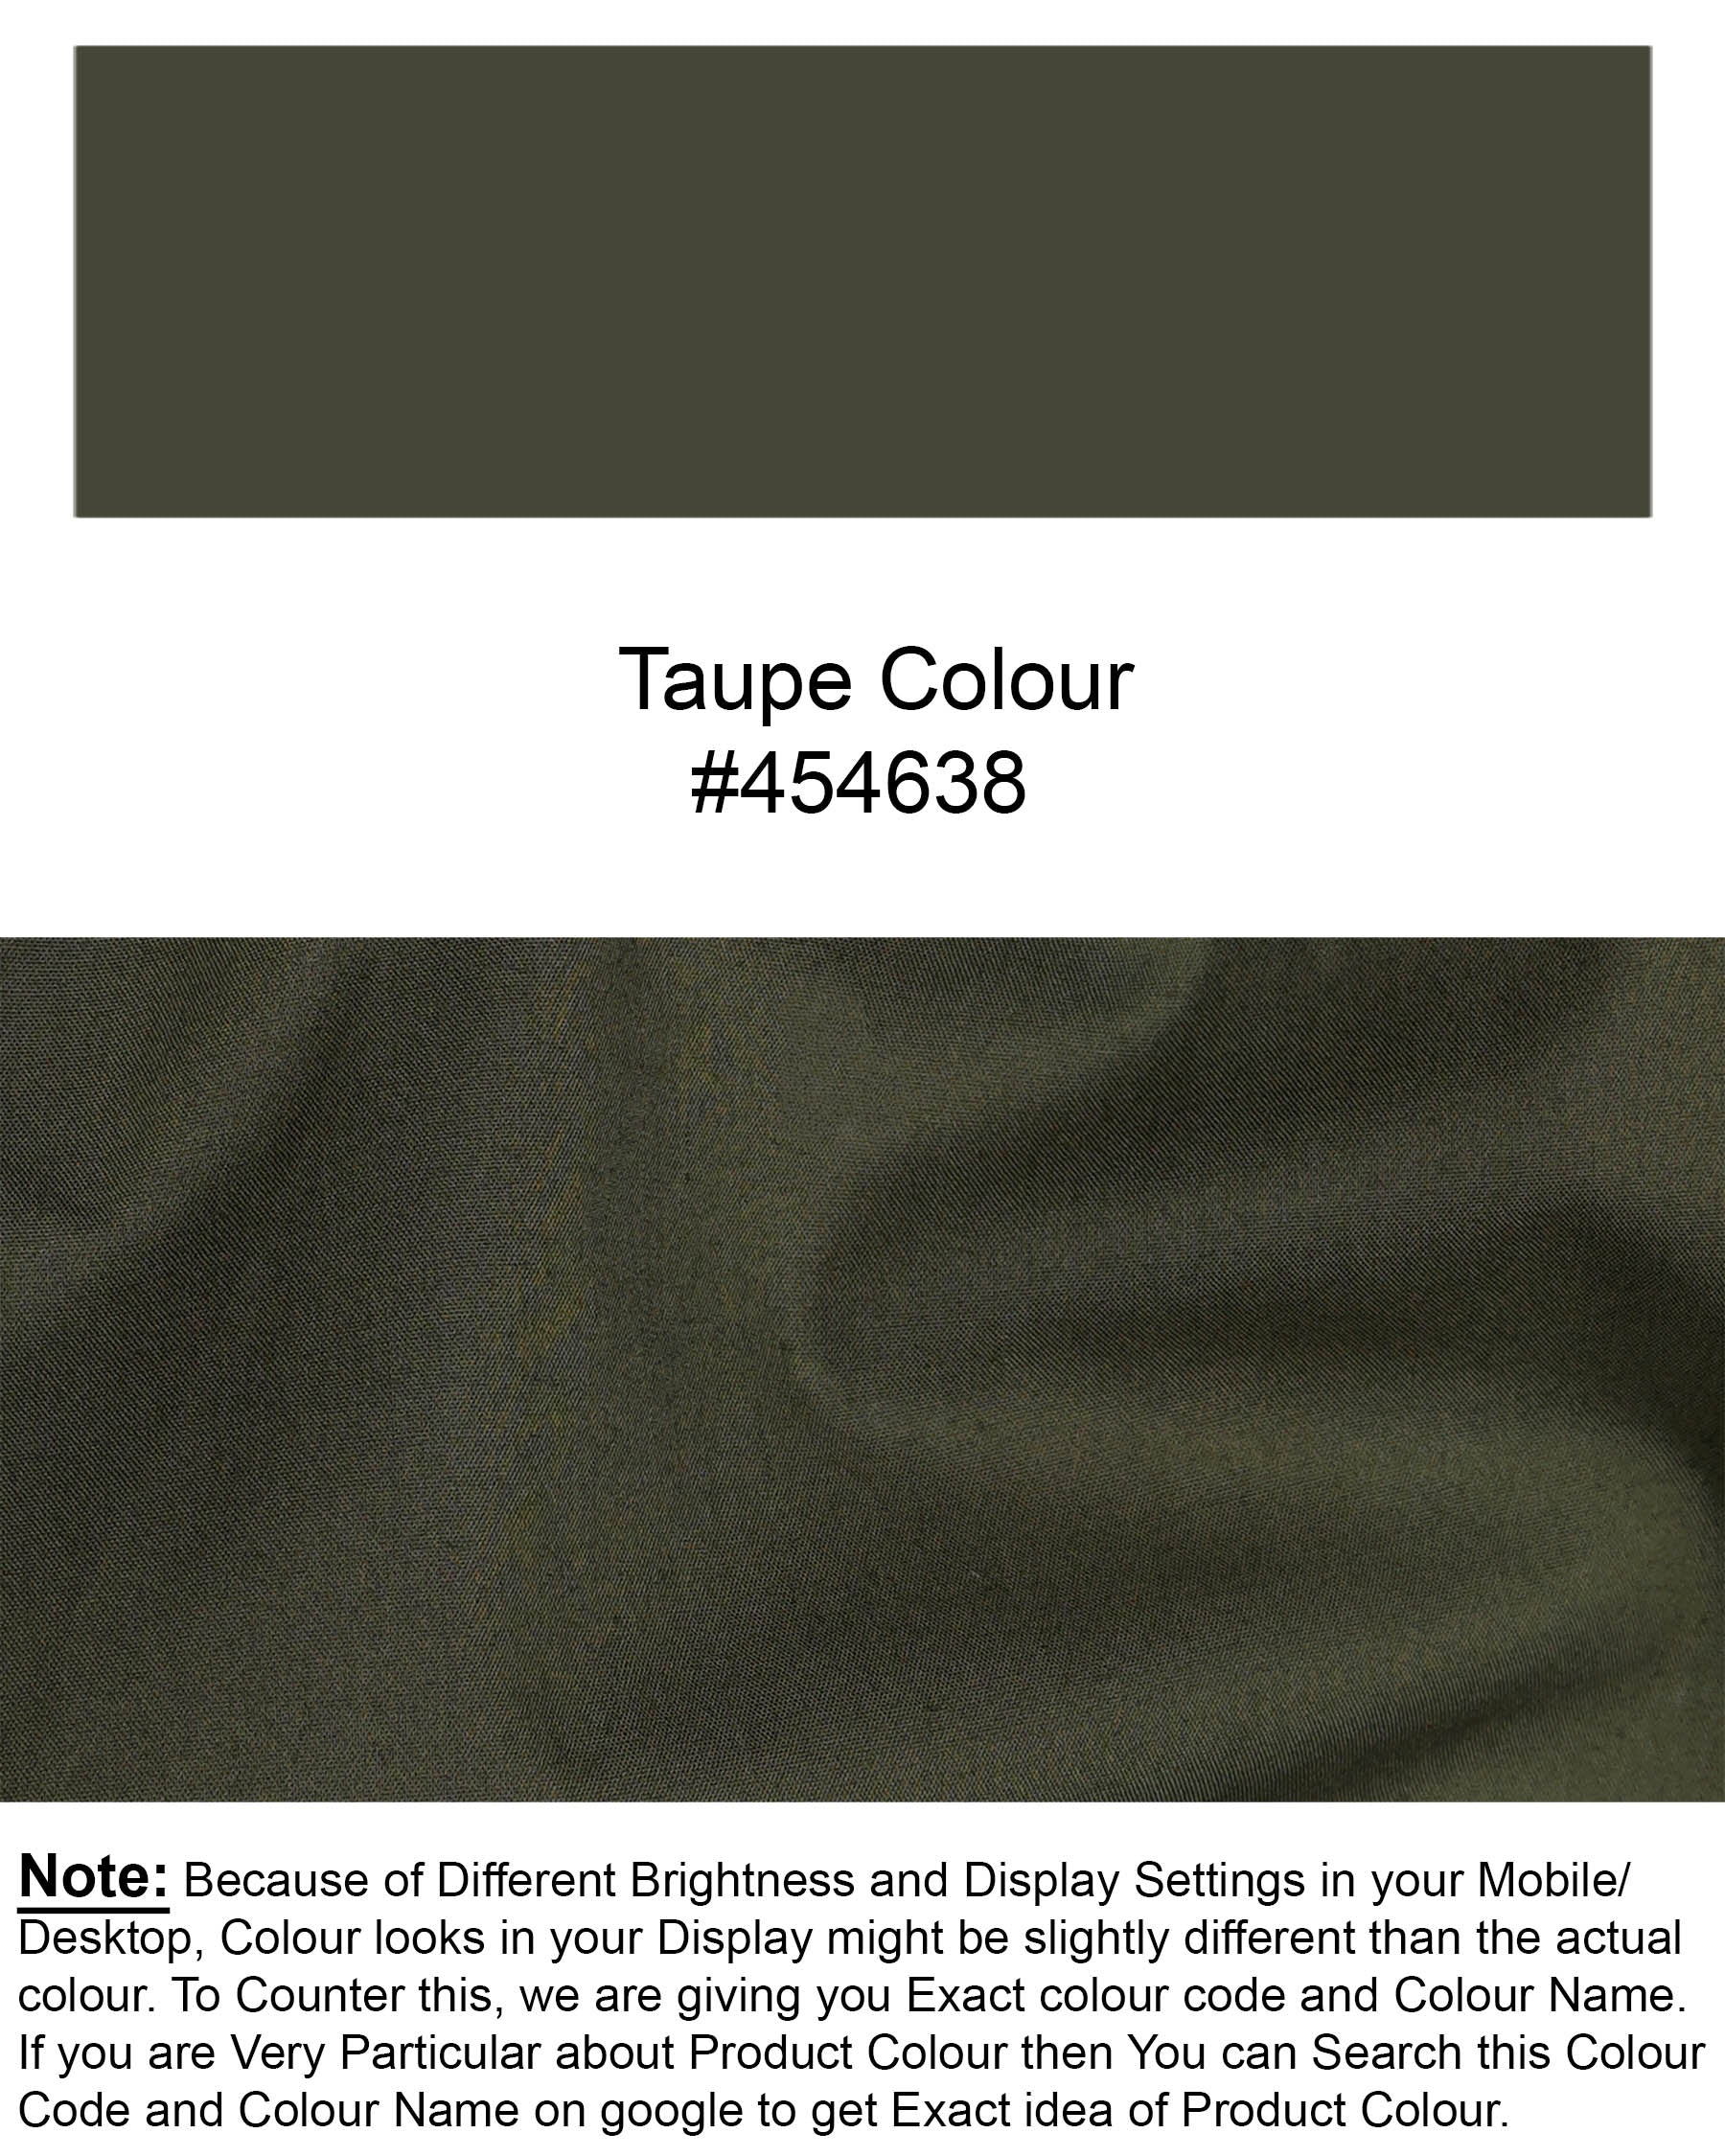 Taupe Green Premium Cotton Shirt 7654-38,7654-38,7654-39,7654-39,7654-40,7654-40,7654-42,7654-42,7654-44,7654-44,7654-46,7654-46,7654-48,7654-48,7654-50,7654-50,7654-52,7654-52